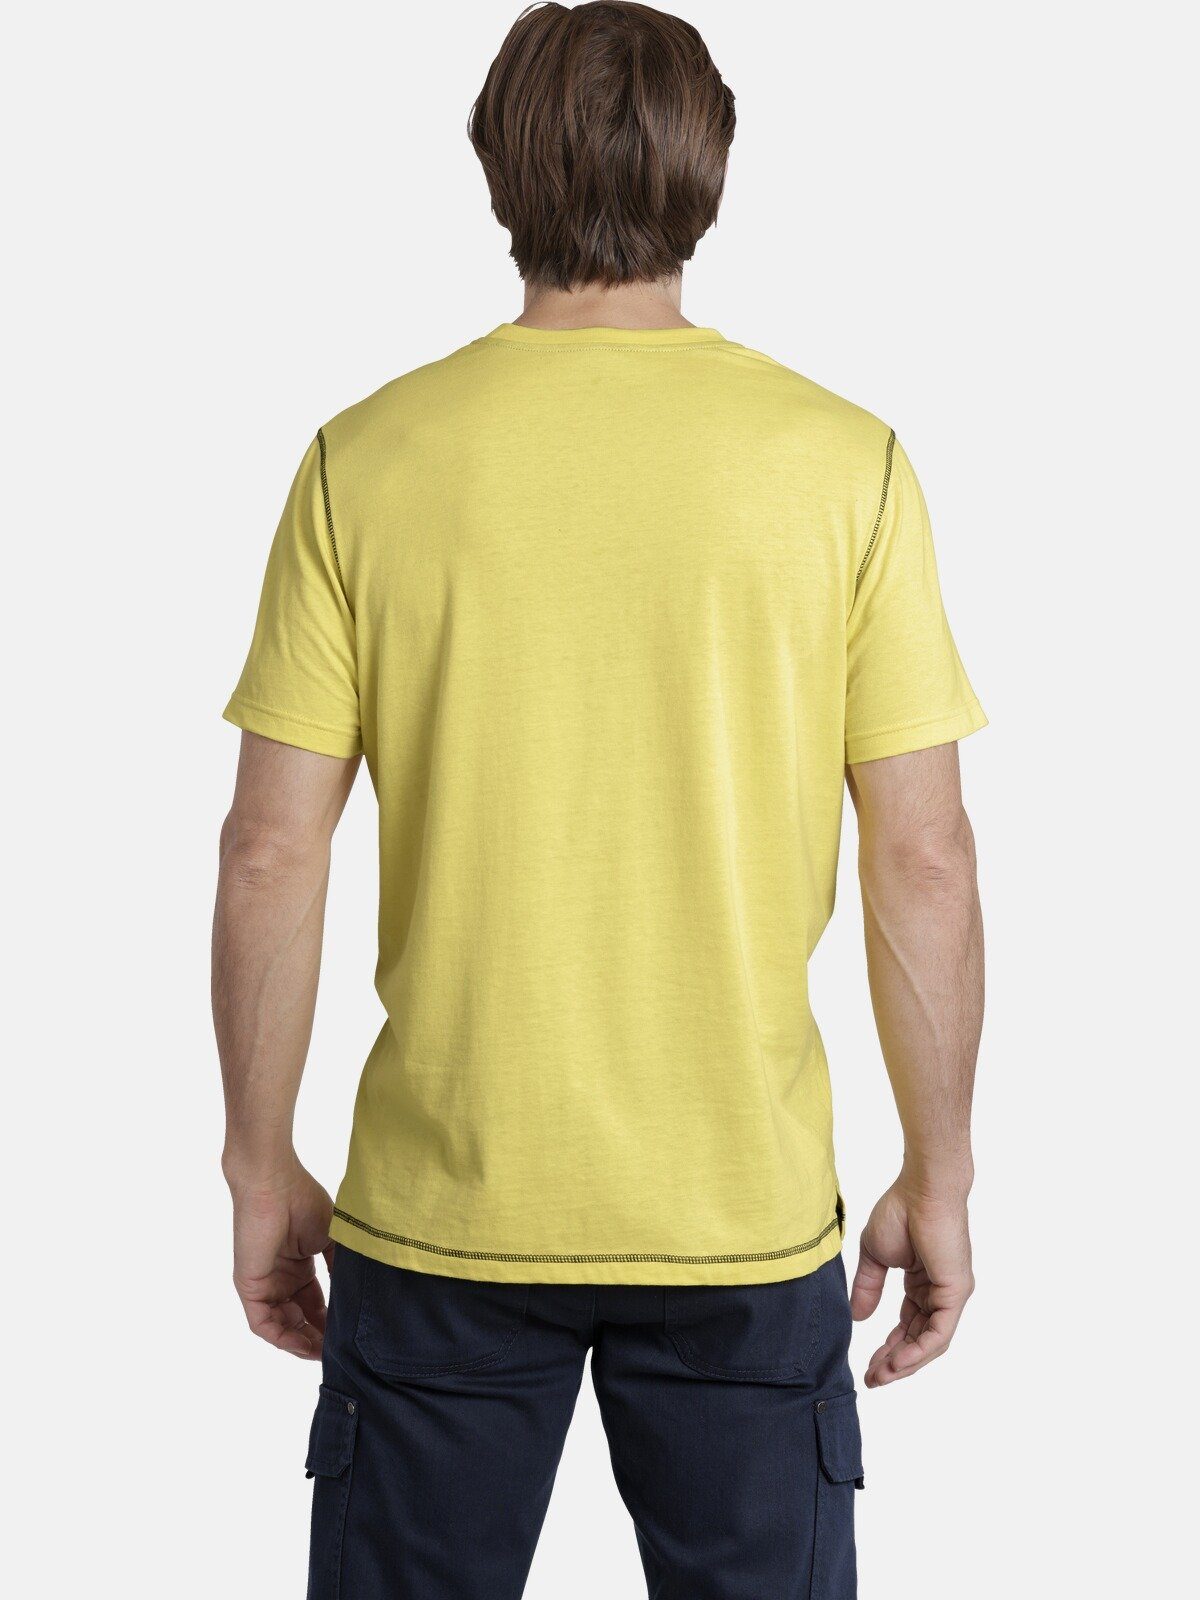 Baumwolle TANKRED T-Shirt reine Fit, Jan Comfort Vanderstorm